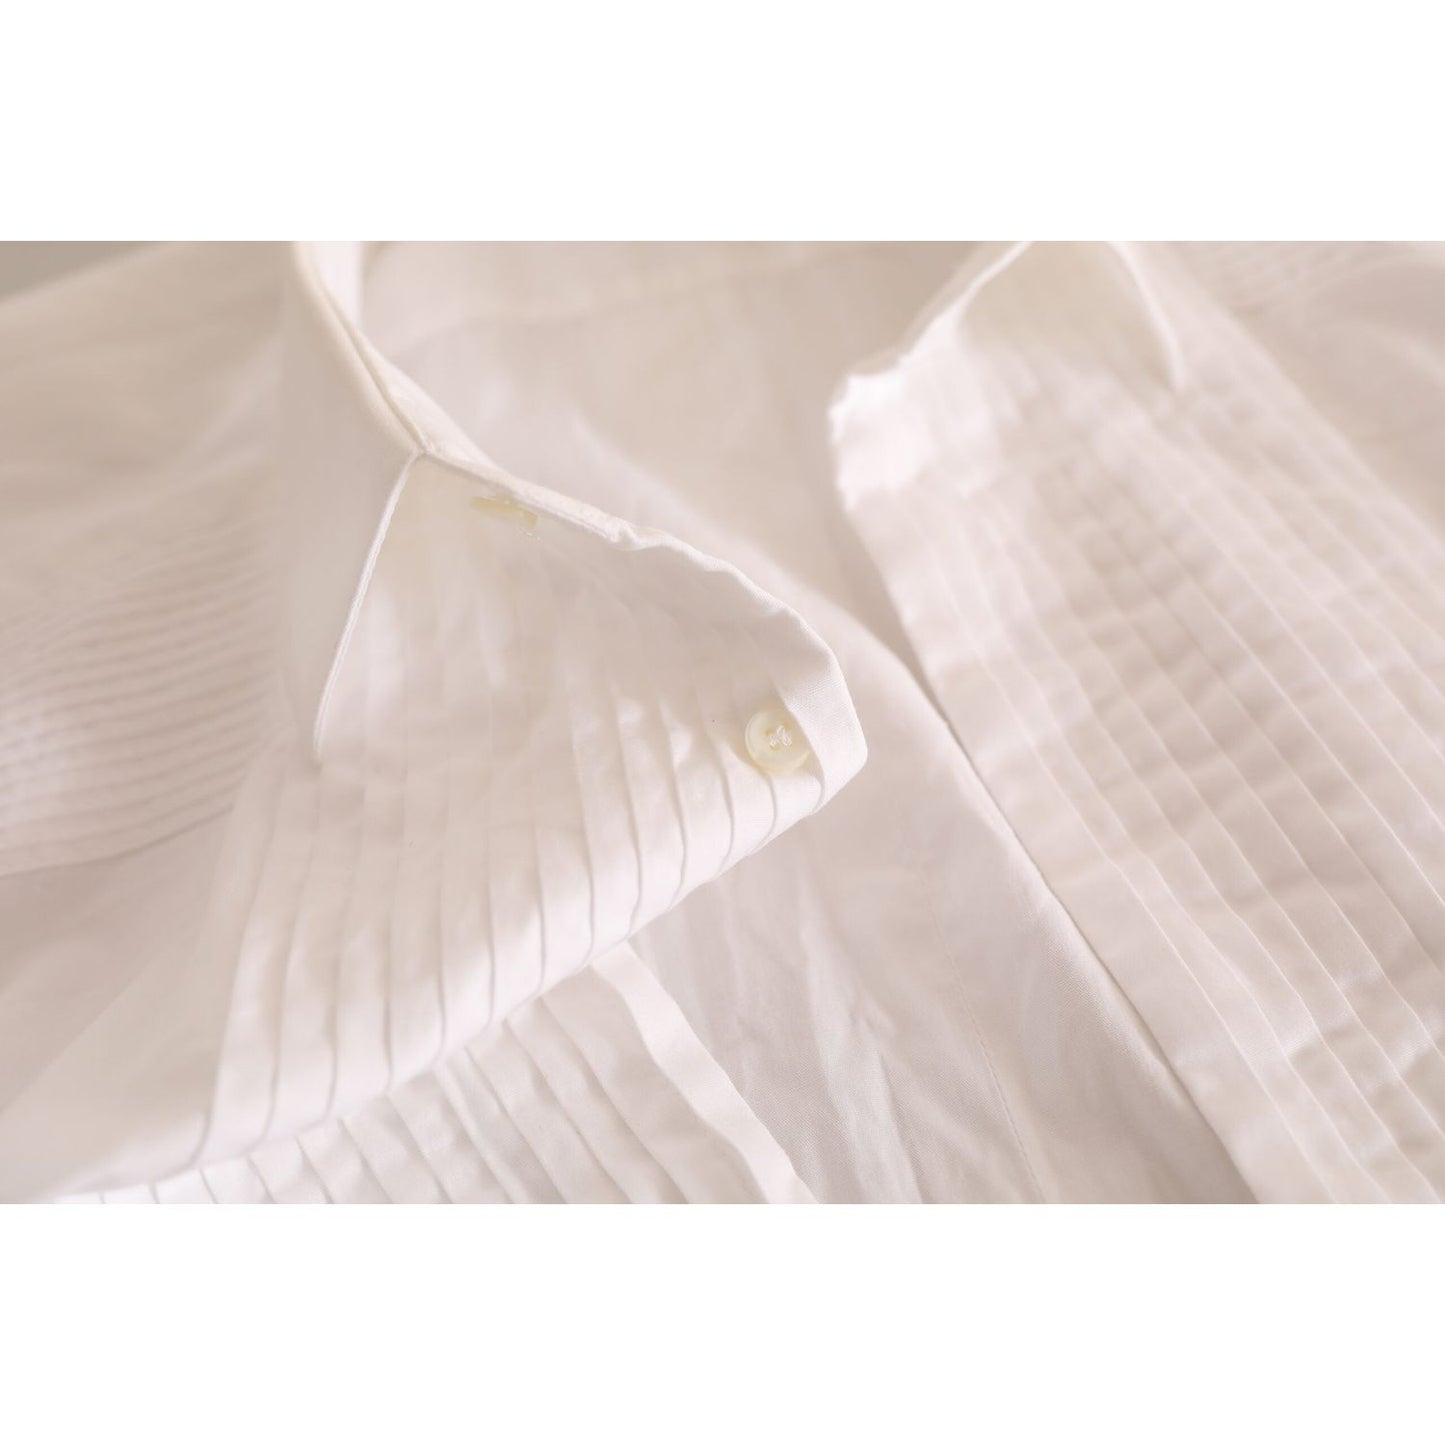 Dolce & Gabbana Elegant White Slim Fit Cotton Dress Shirt white-gold-formal-cotton-tuxedo-dress-shirt